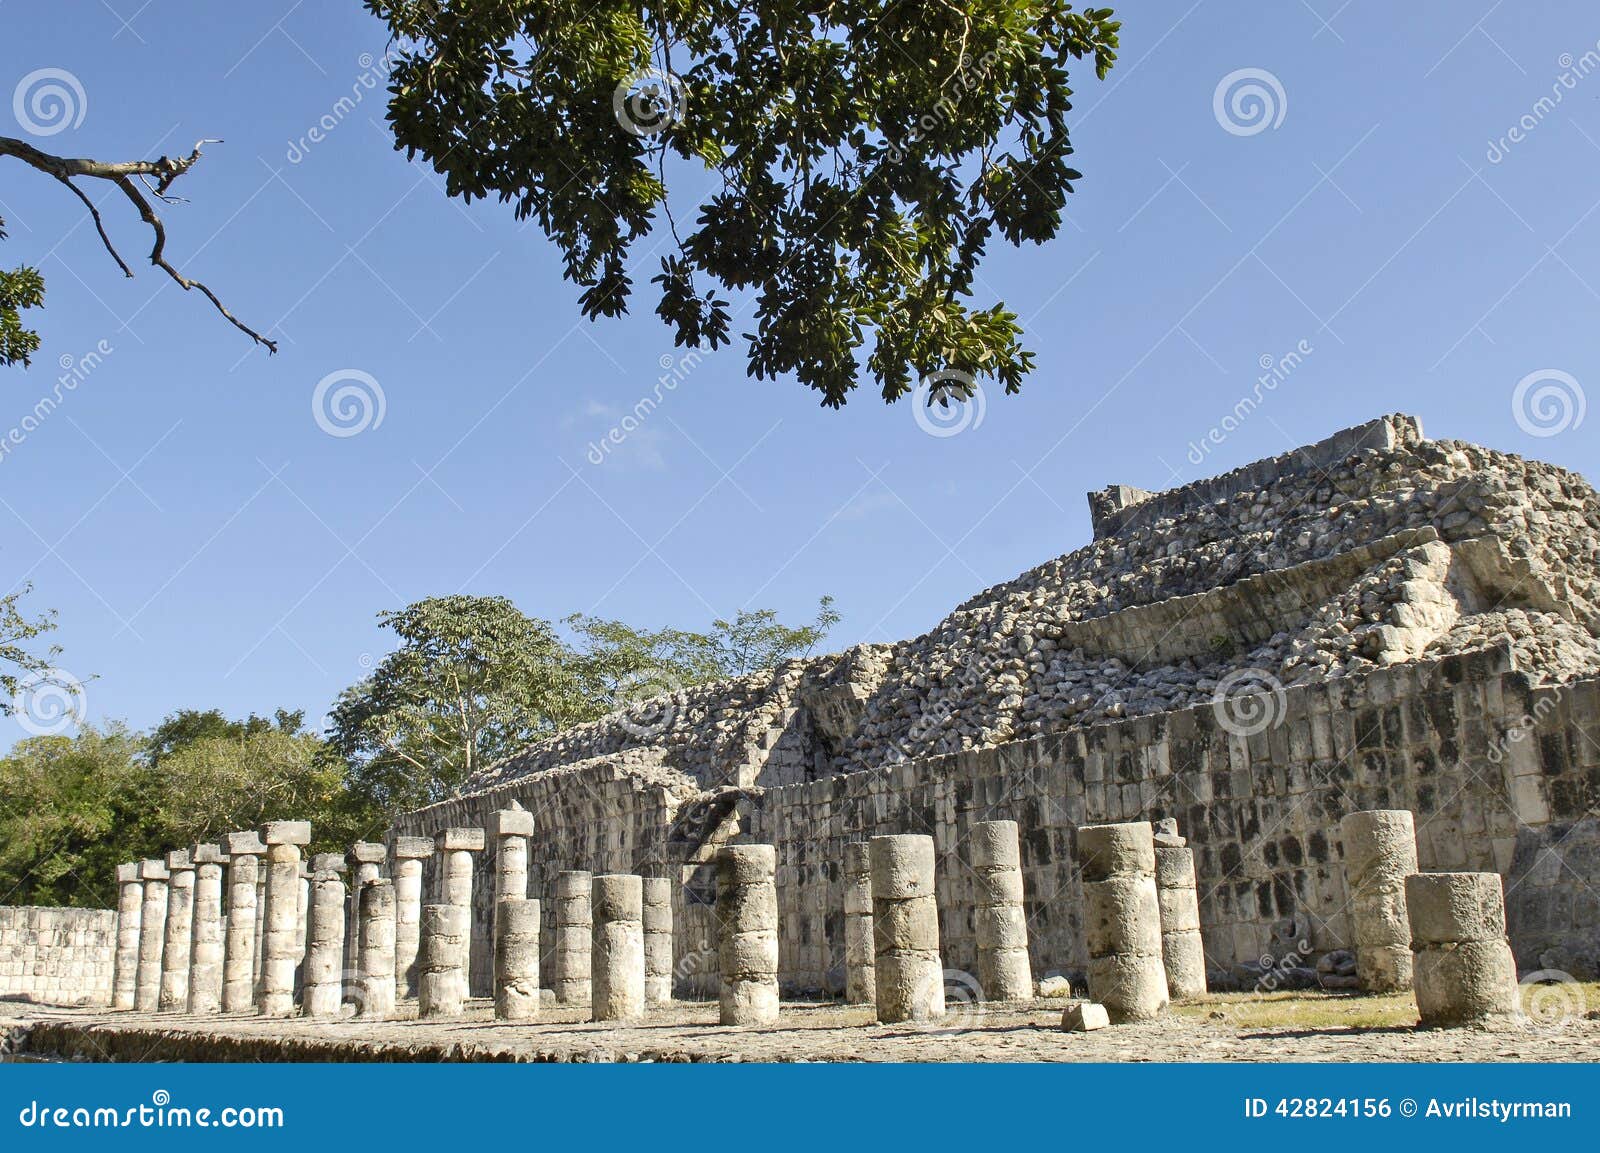 ancient pillars built by the mayas